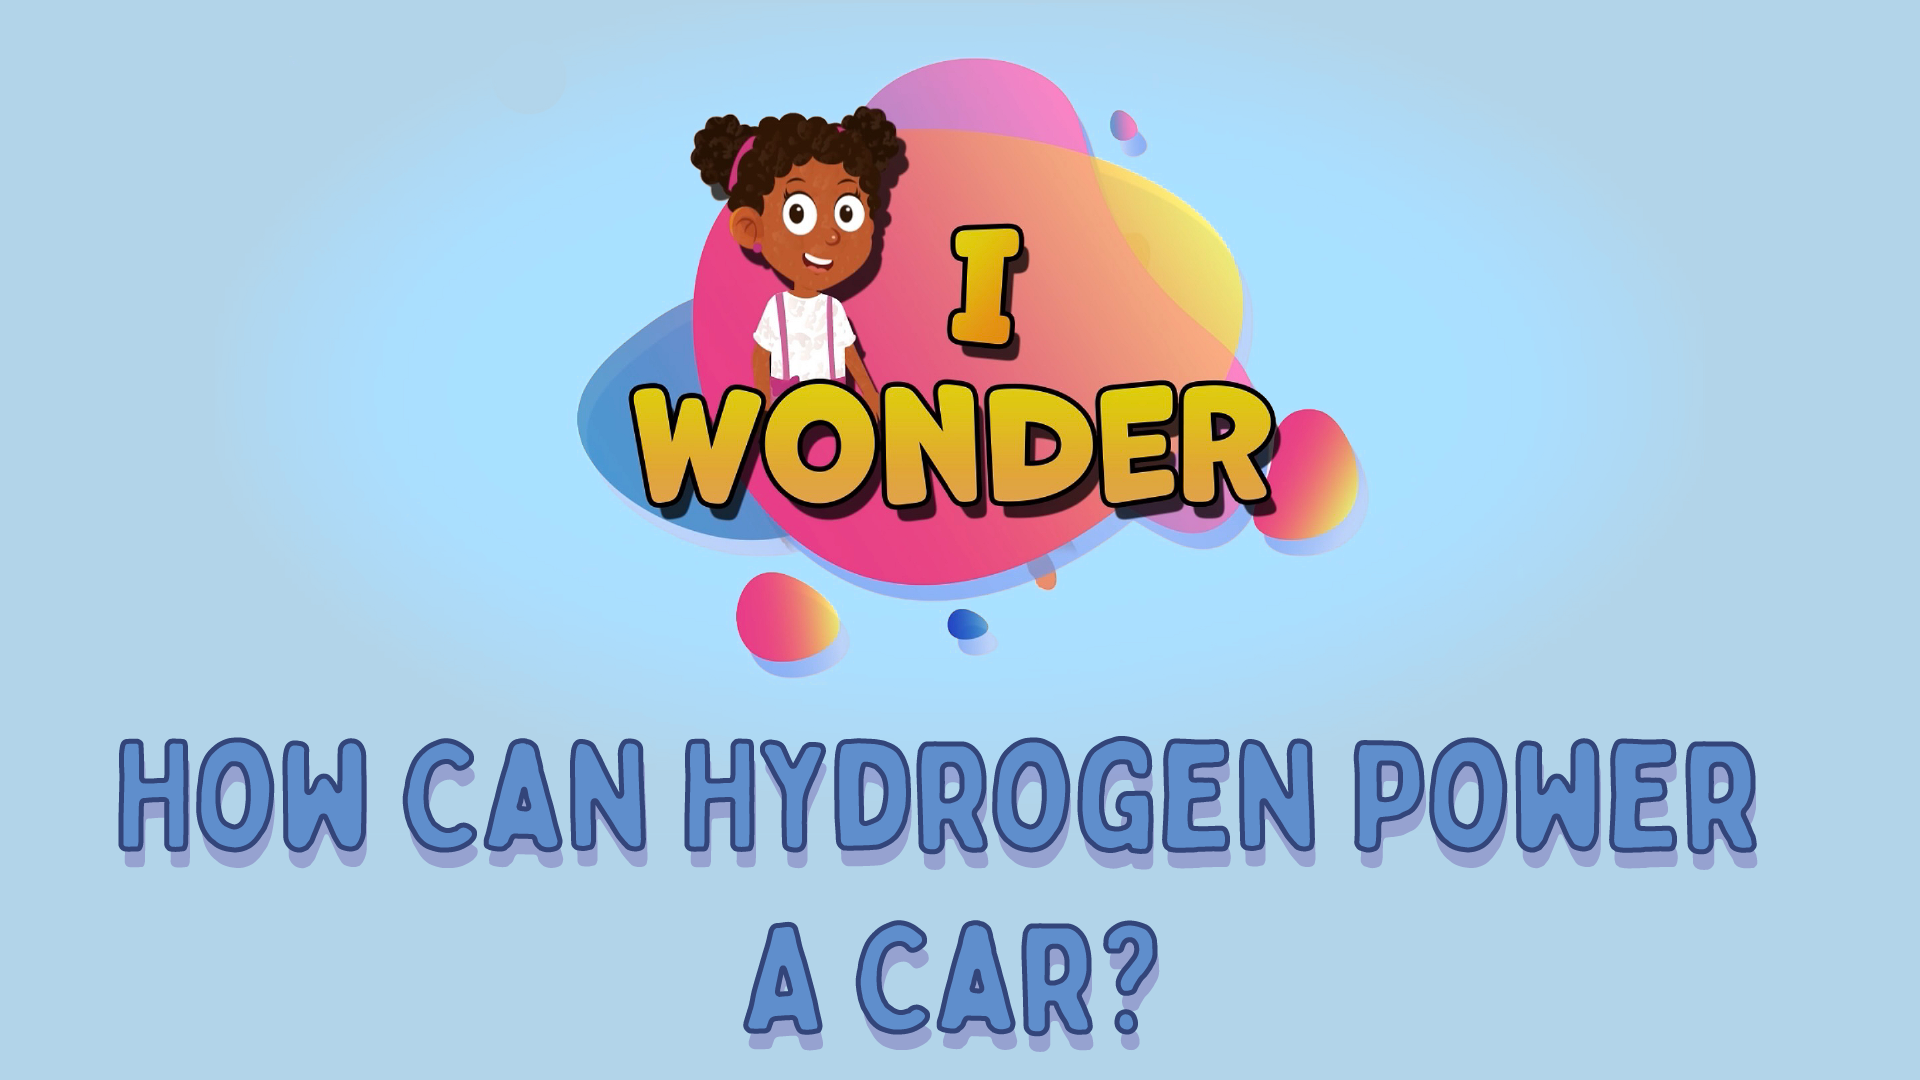 How Can Hydrogen Power A Car?